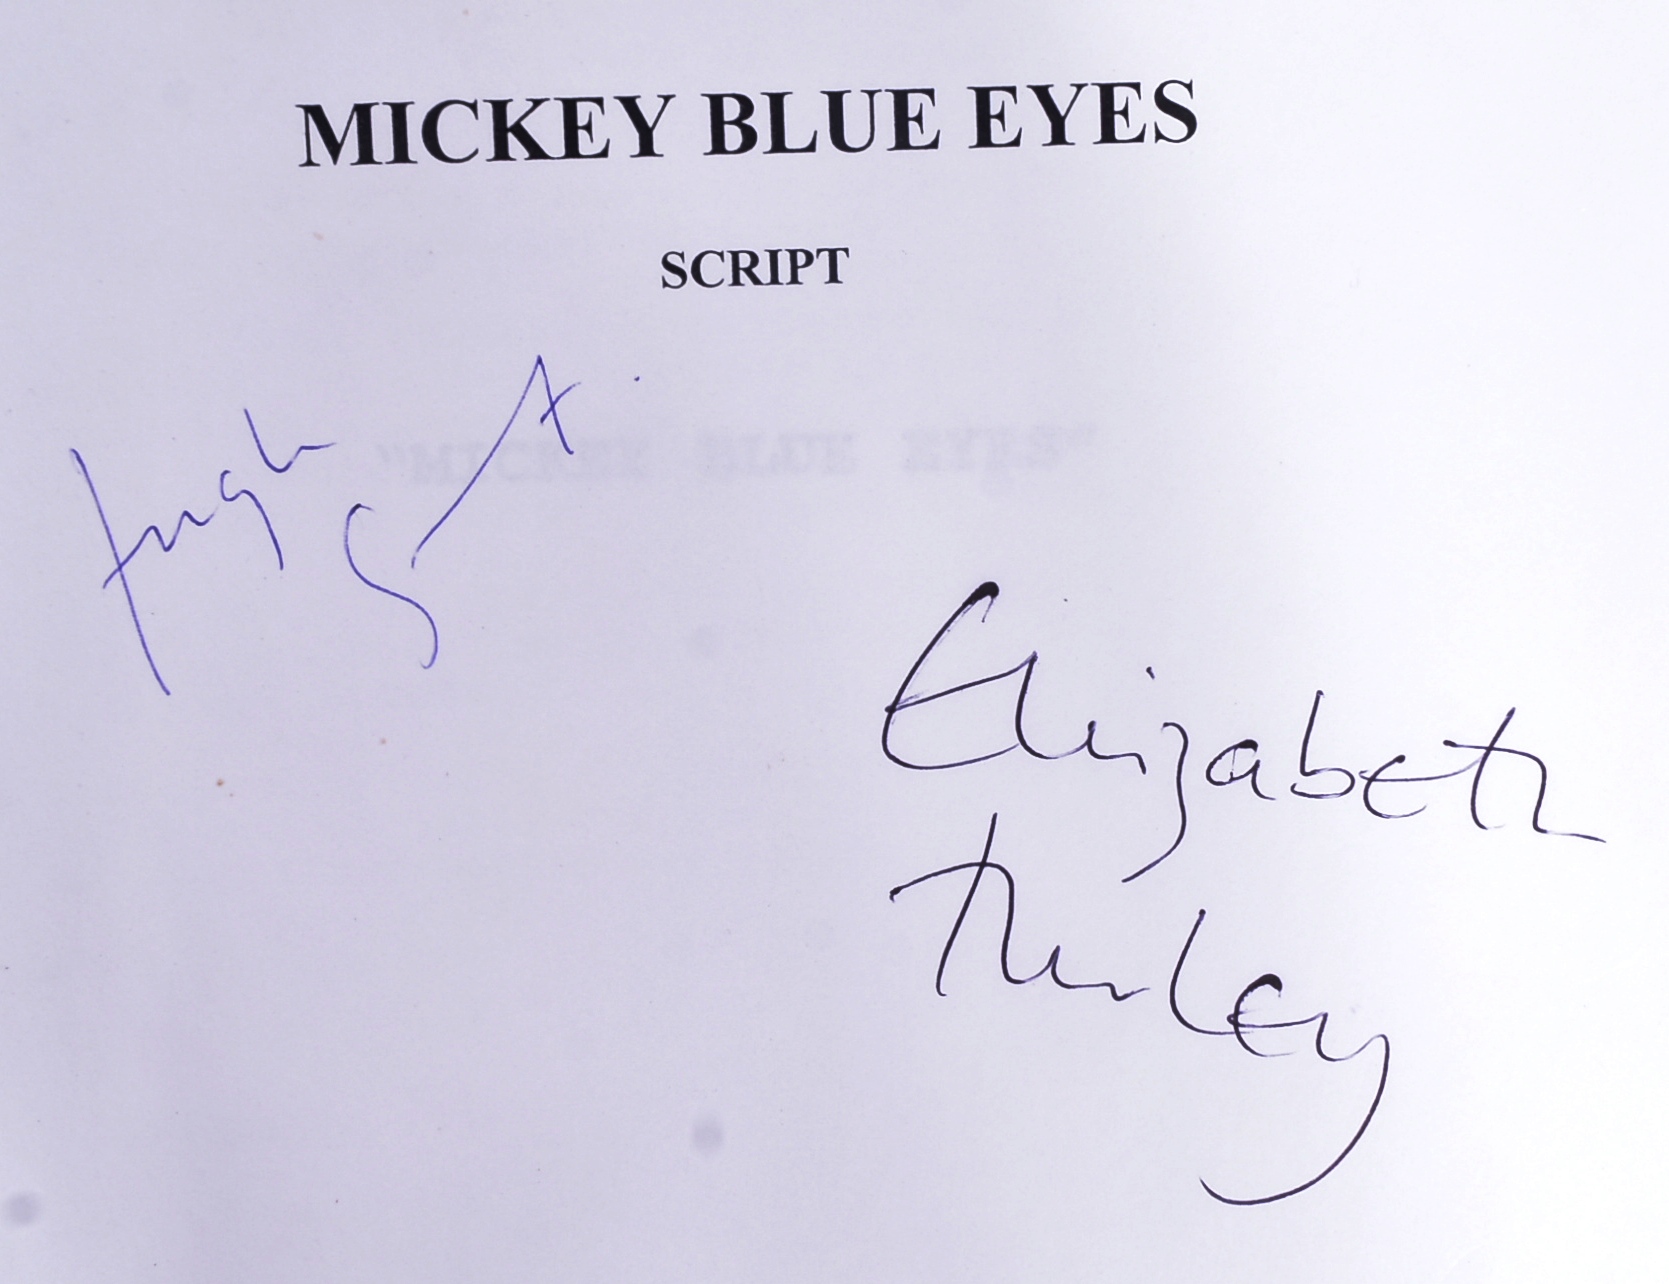 MICKEY BLUE EYES (1999) - HUGH GRANT & ELIZABETH HURLEY SIGNED SCRIPT - Image 2 of 5